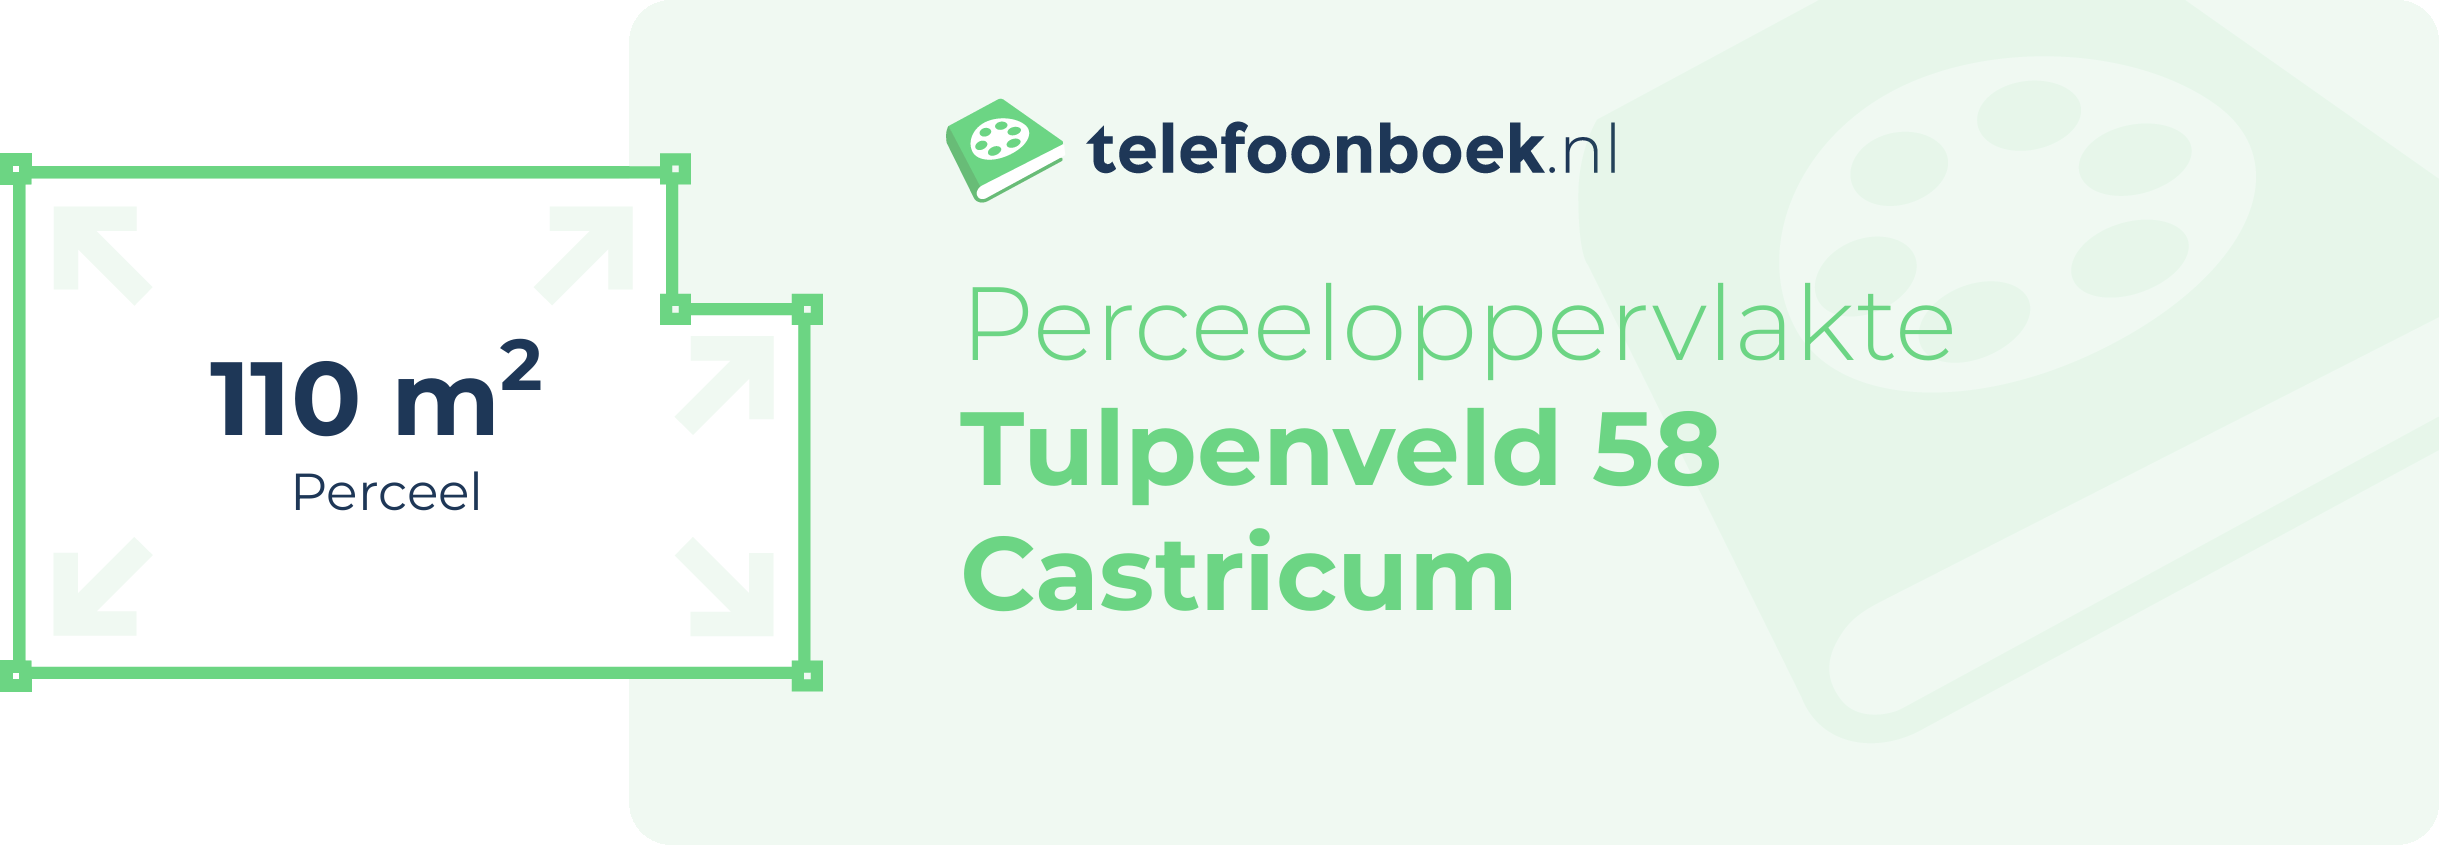 Perceeloppervlakte Tulpenveld 58 Castricum